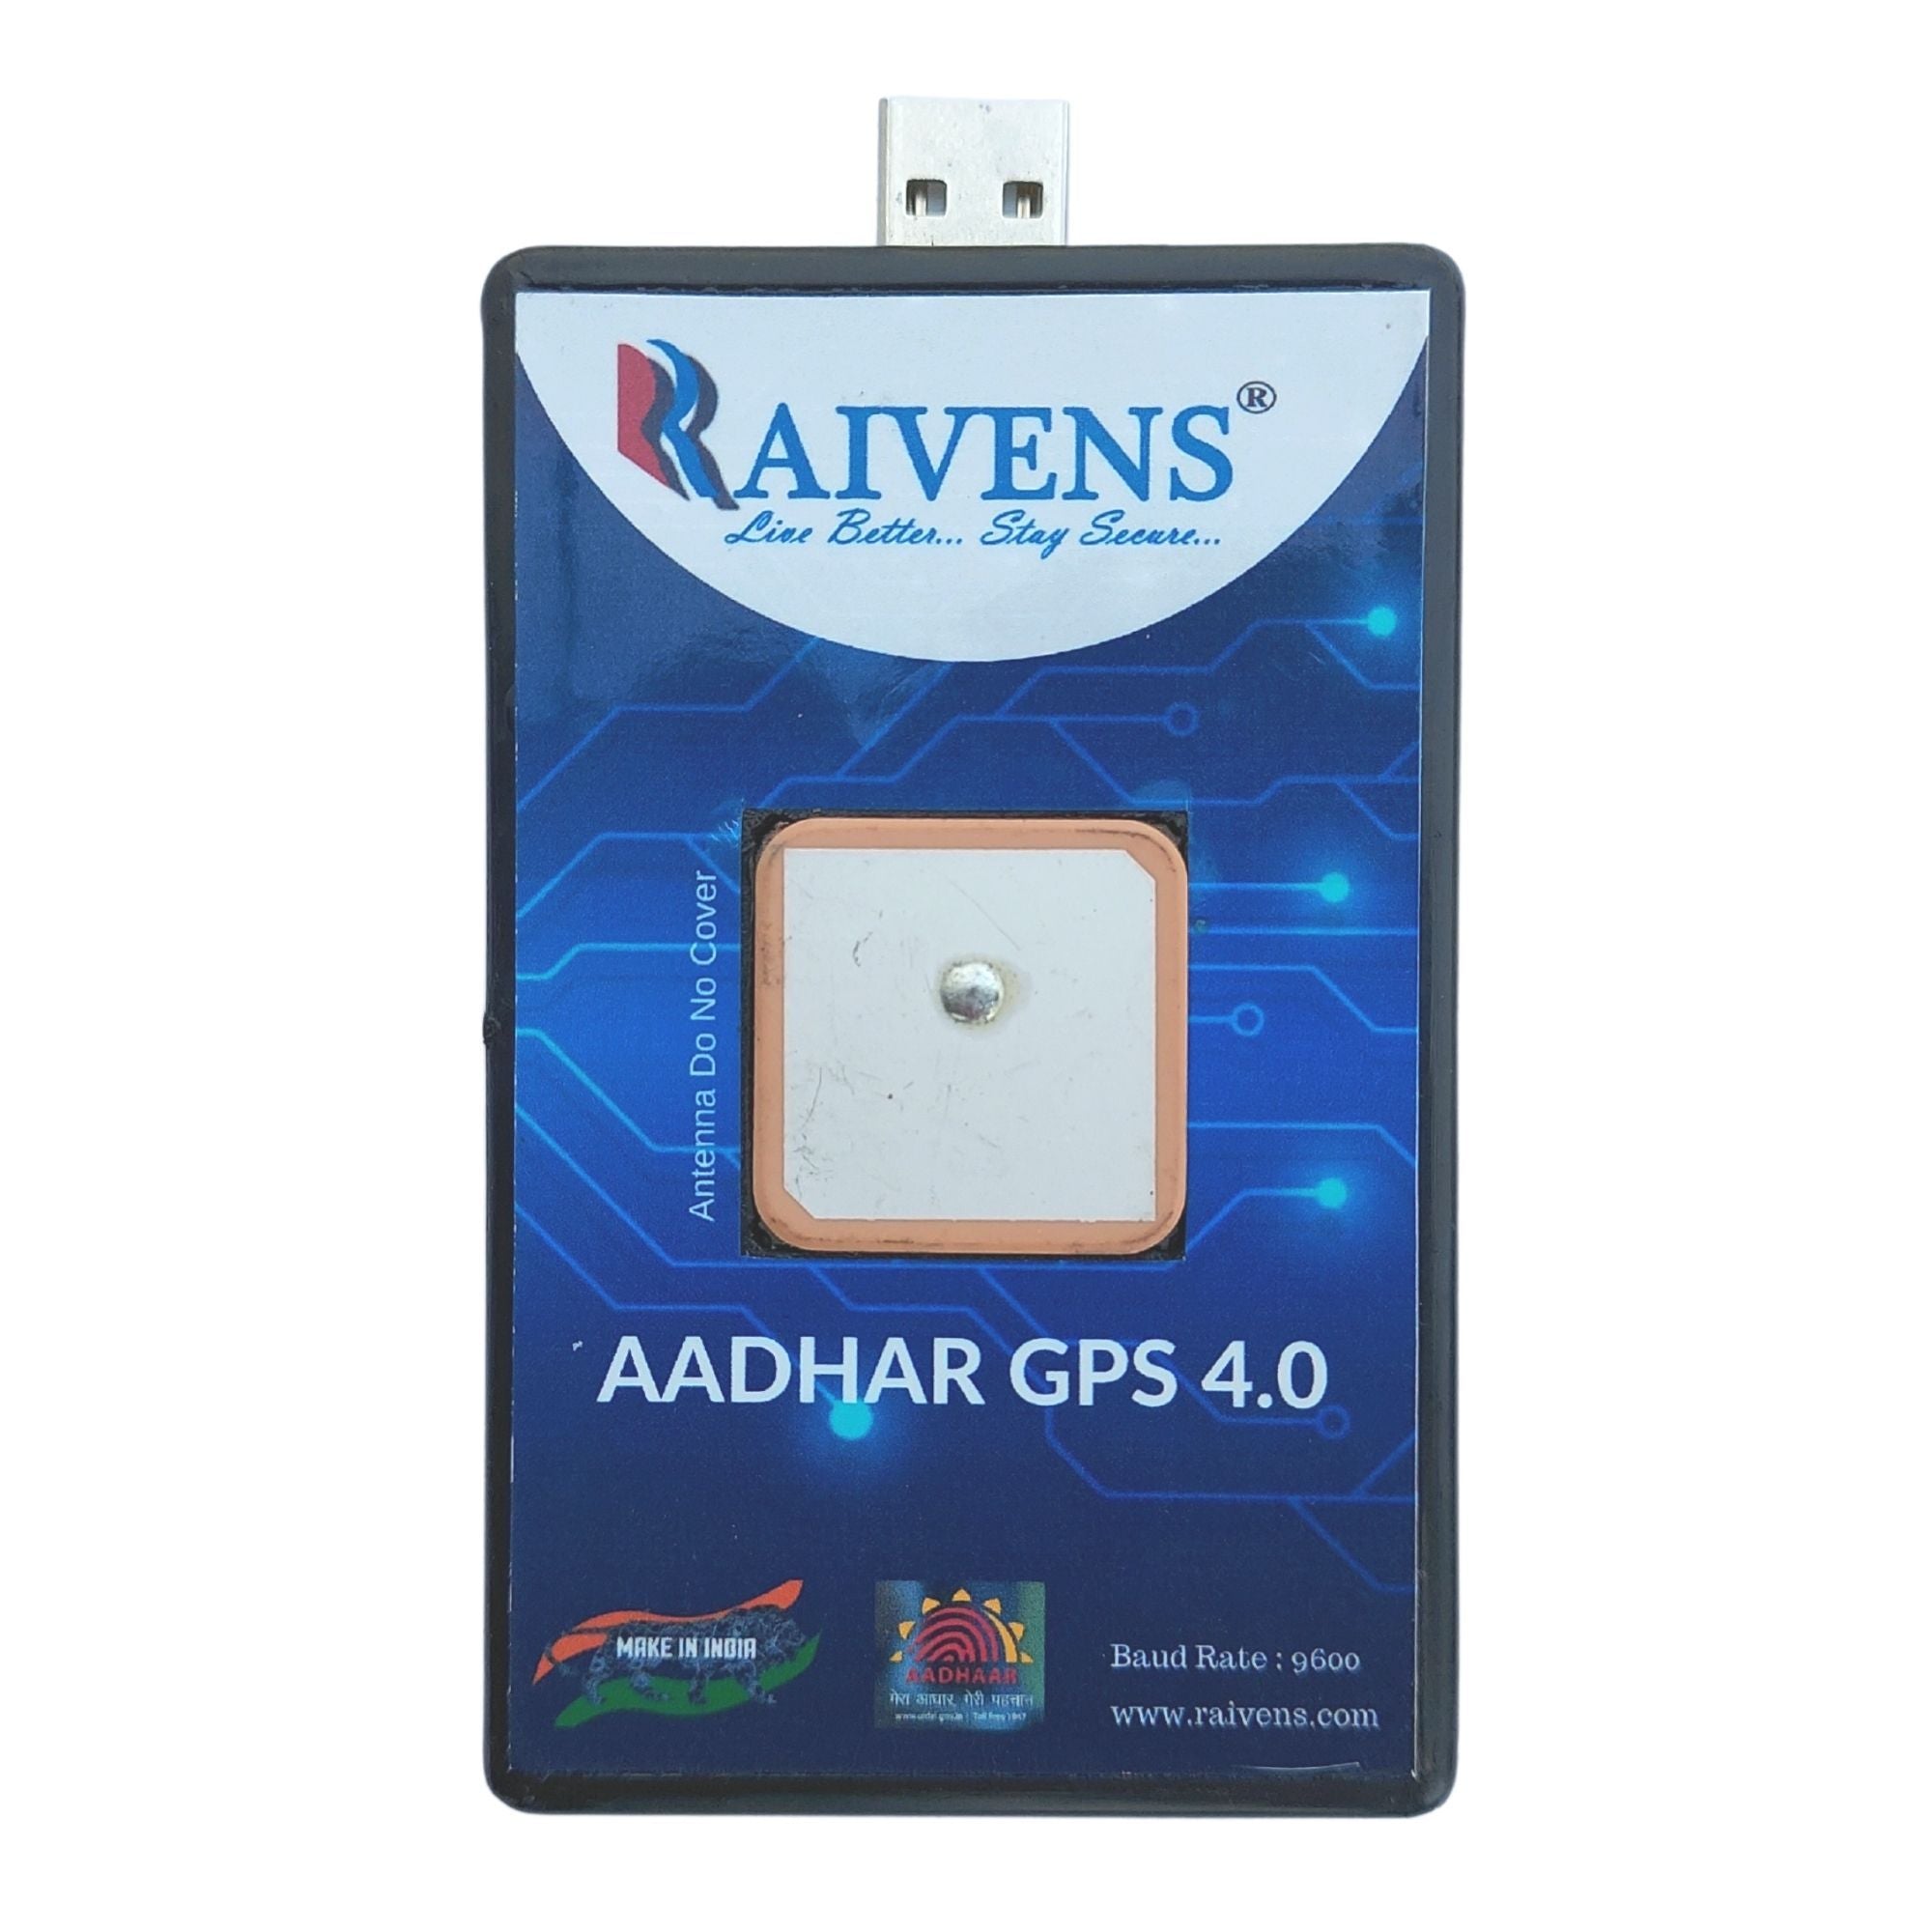 RAIVENS USB GPS Receiver for Aadhaar Centers AAdhar GPS,uidai gps device,gps device for aadhar